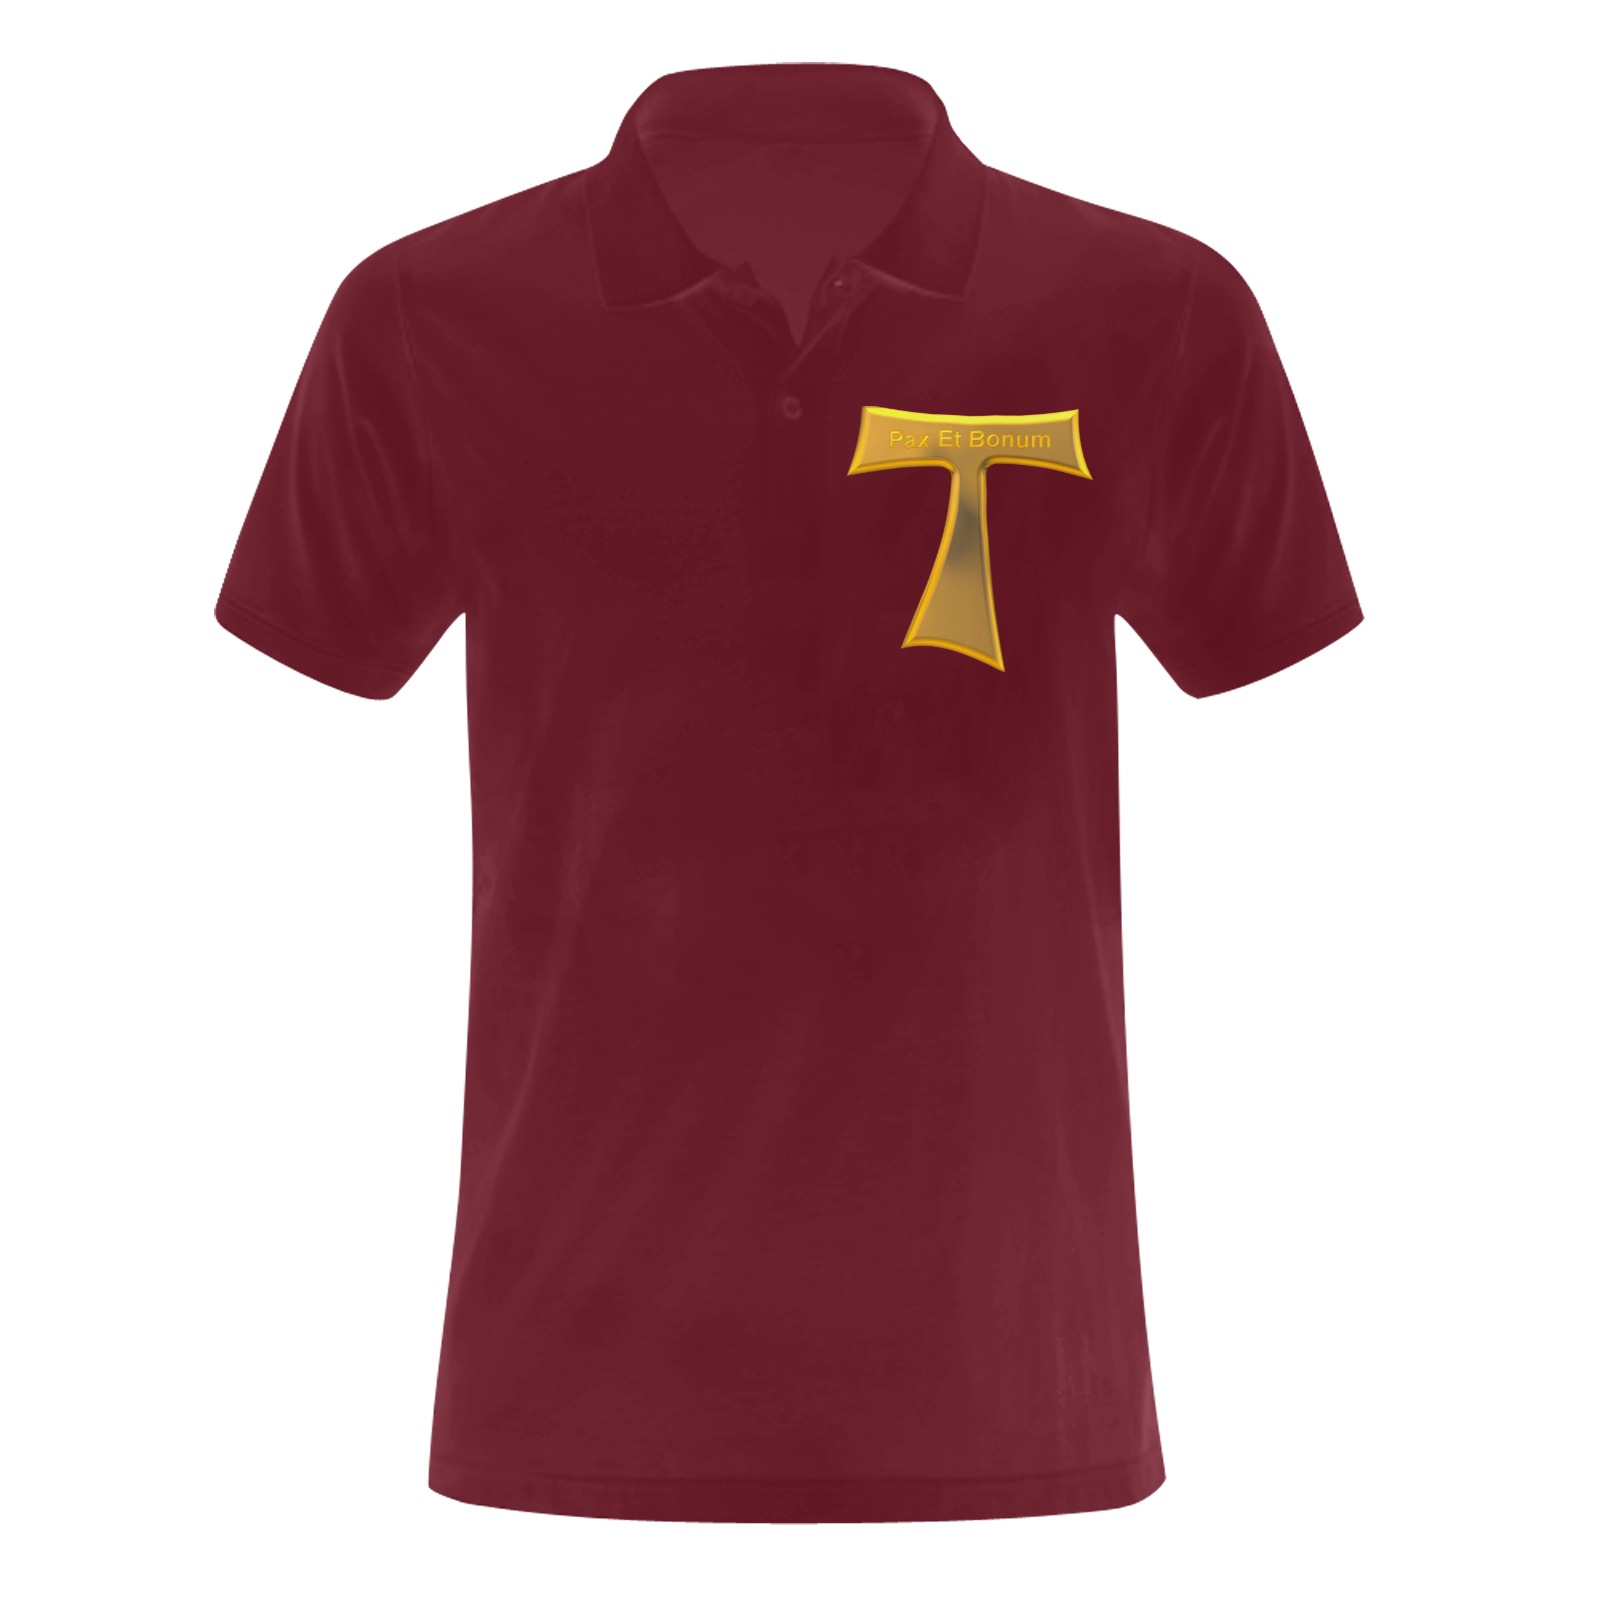 Franciscan Tau Cross Pax Et Bonum Gold  Metallic Men's Polo Shirt (Model T24)